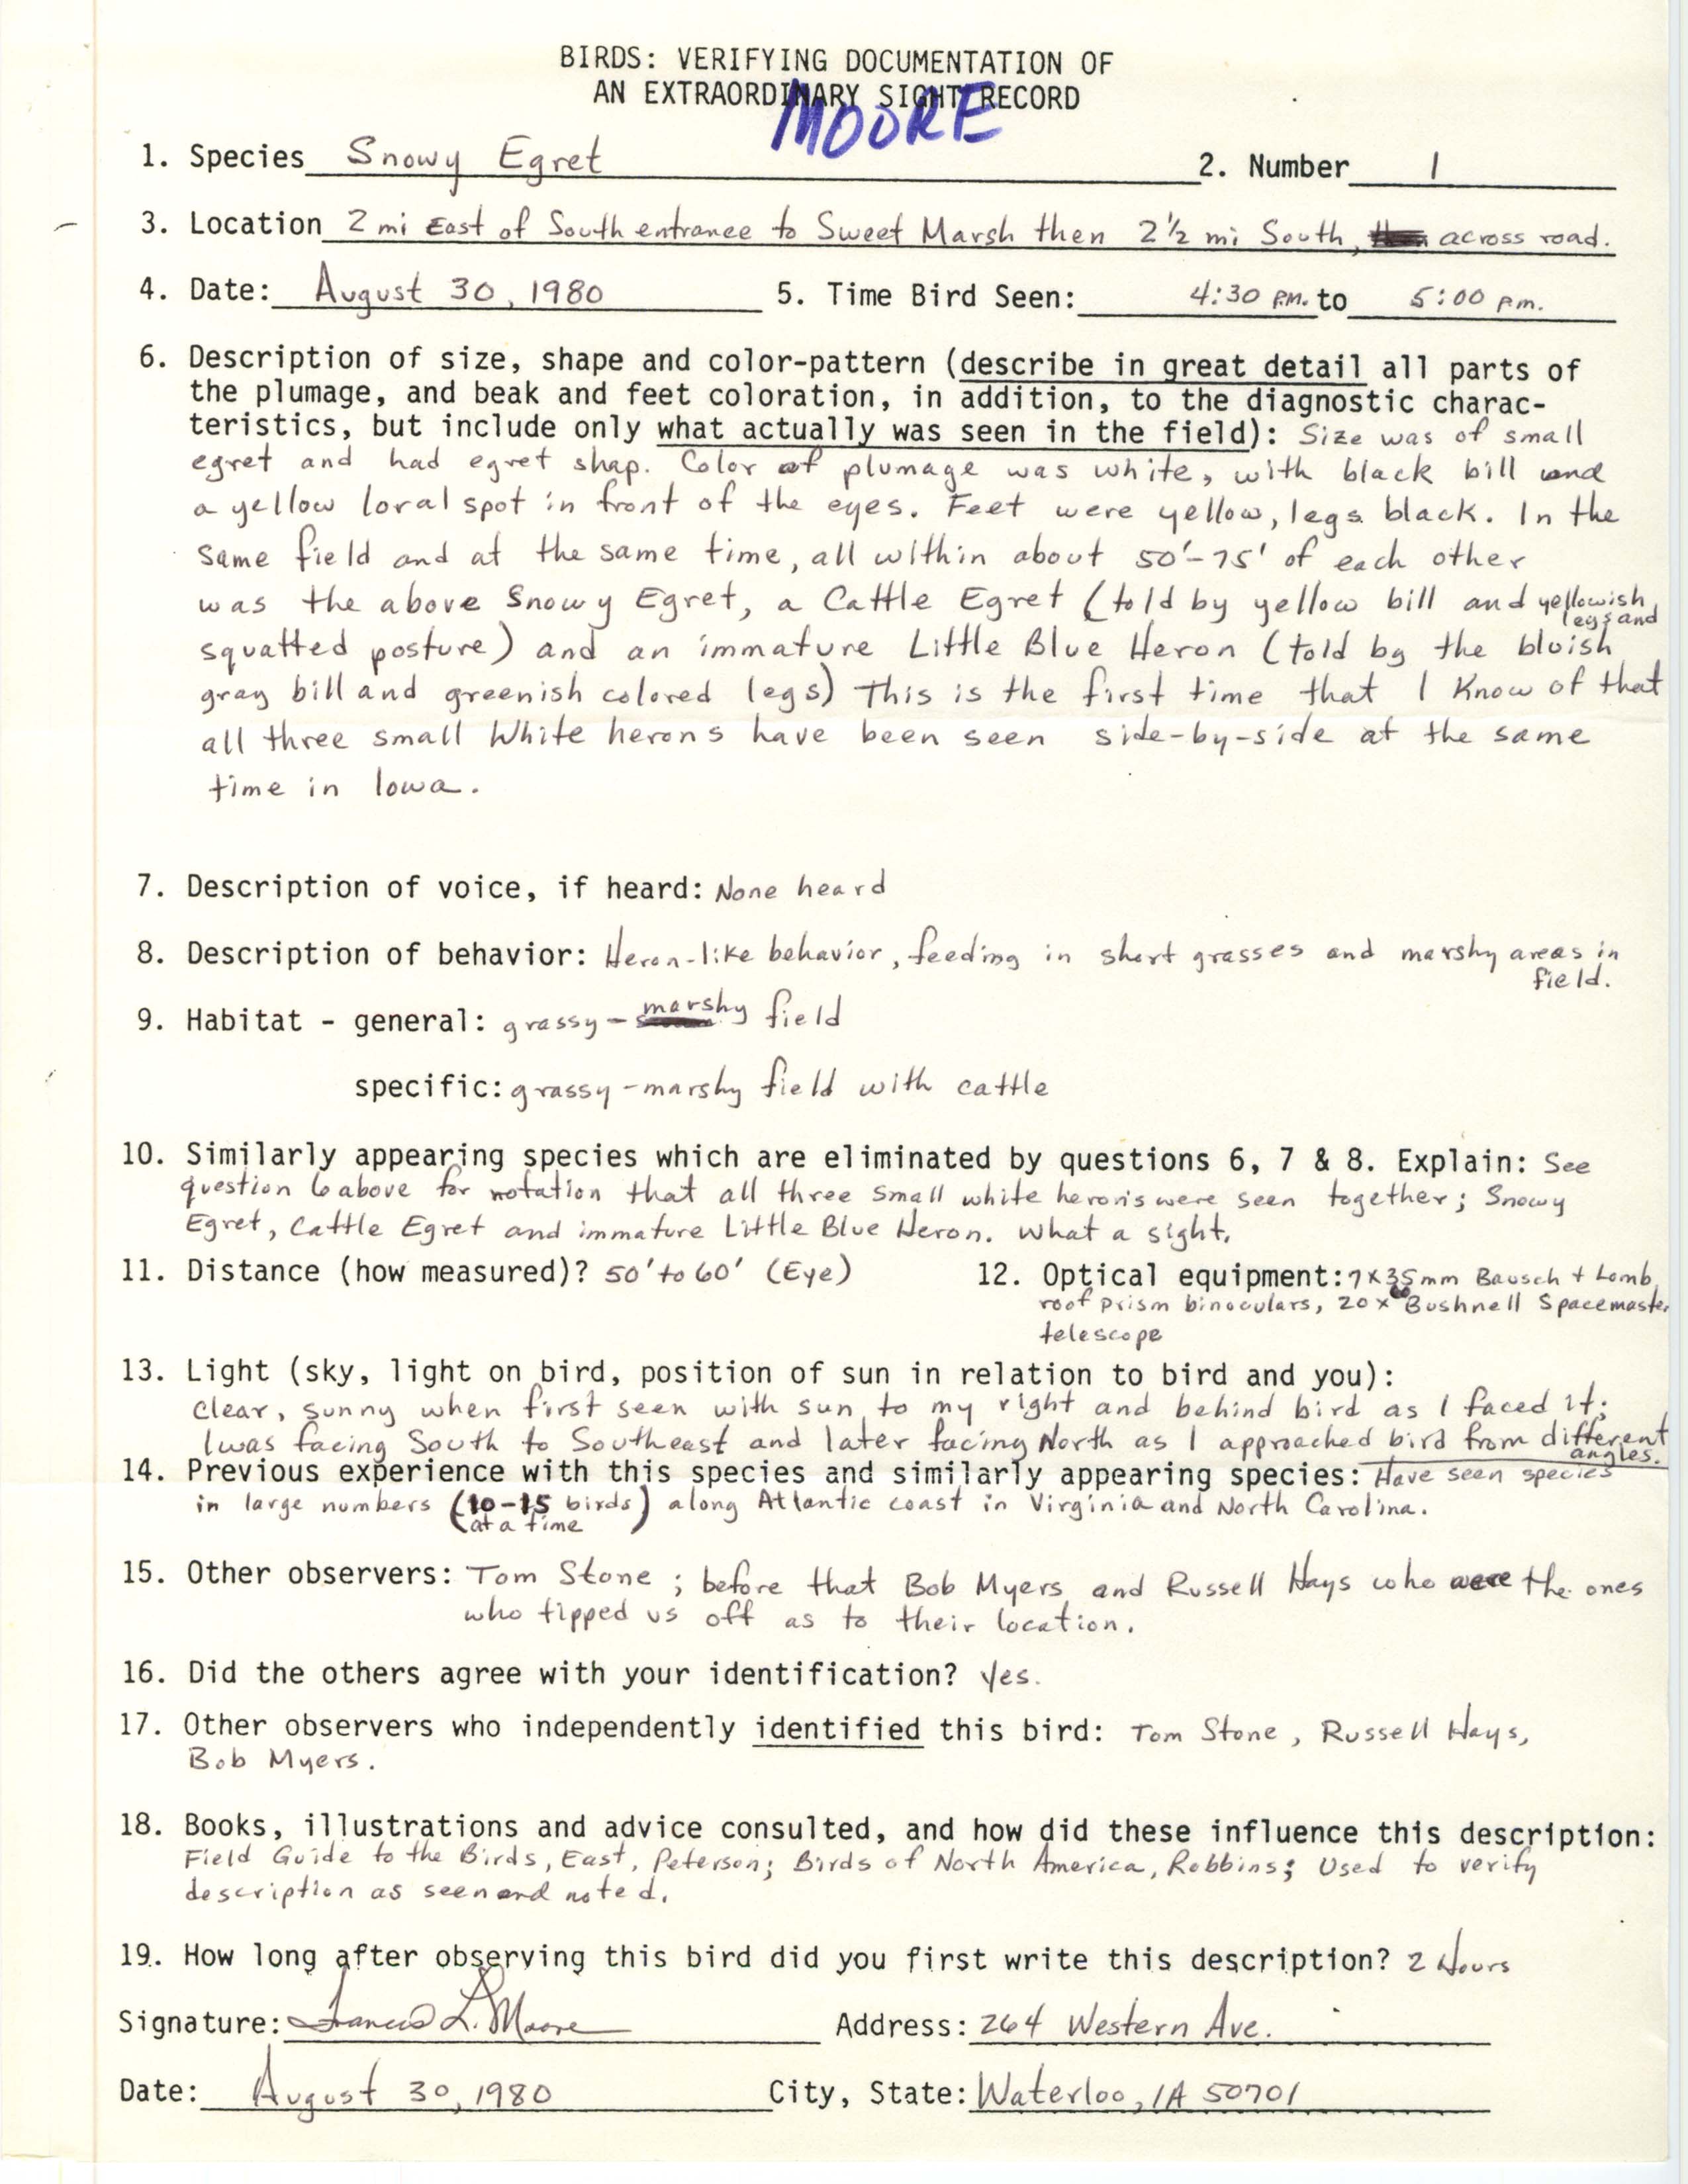 Rare bird documentation form for Snowy Egret at Sweet Marsh, 1980